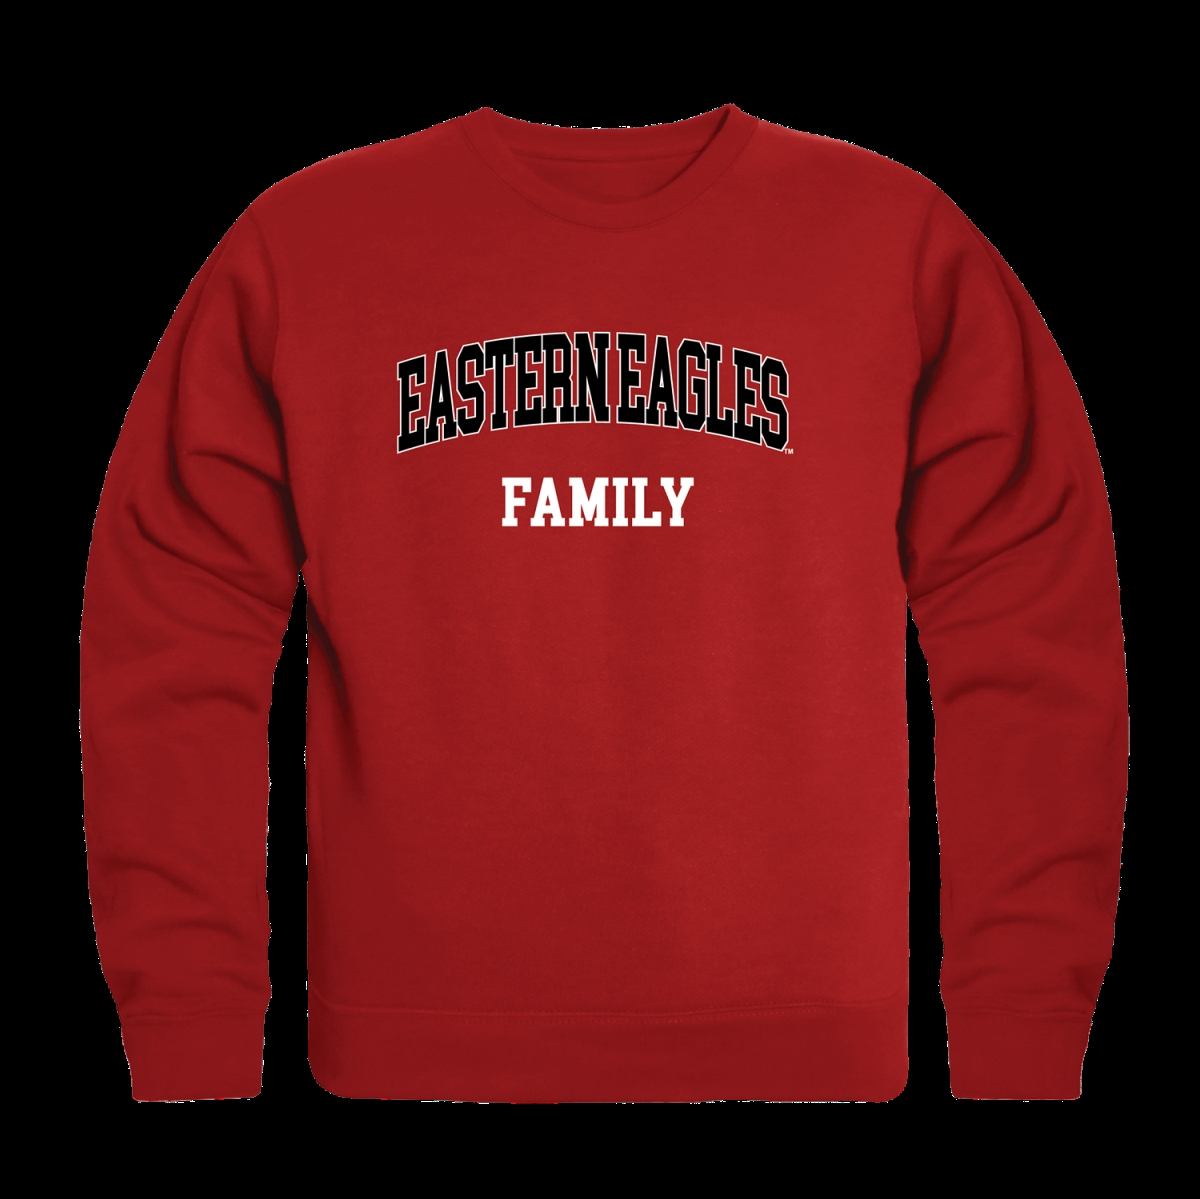 W Republic 572-296-RED-03 Eastern Washington University Eagles Family Crewneck Sweatshirt&#44; Red - Large